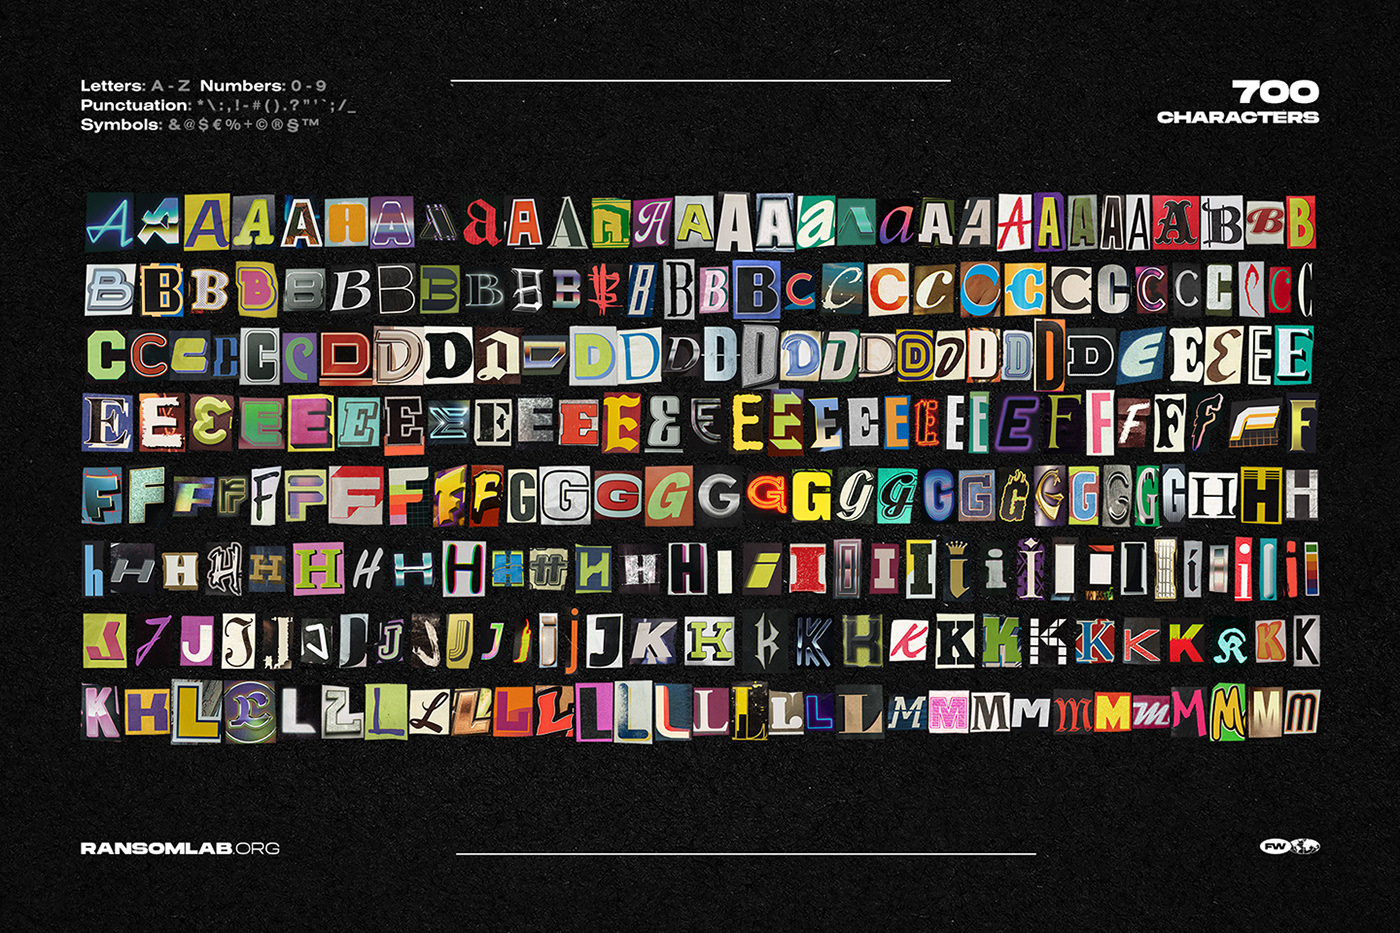 collage Poster Design photoshop plugin cut-out letters alphabet text retro design vintage ransom note